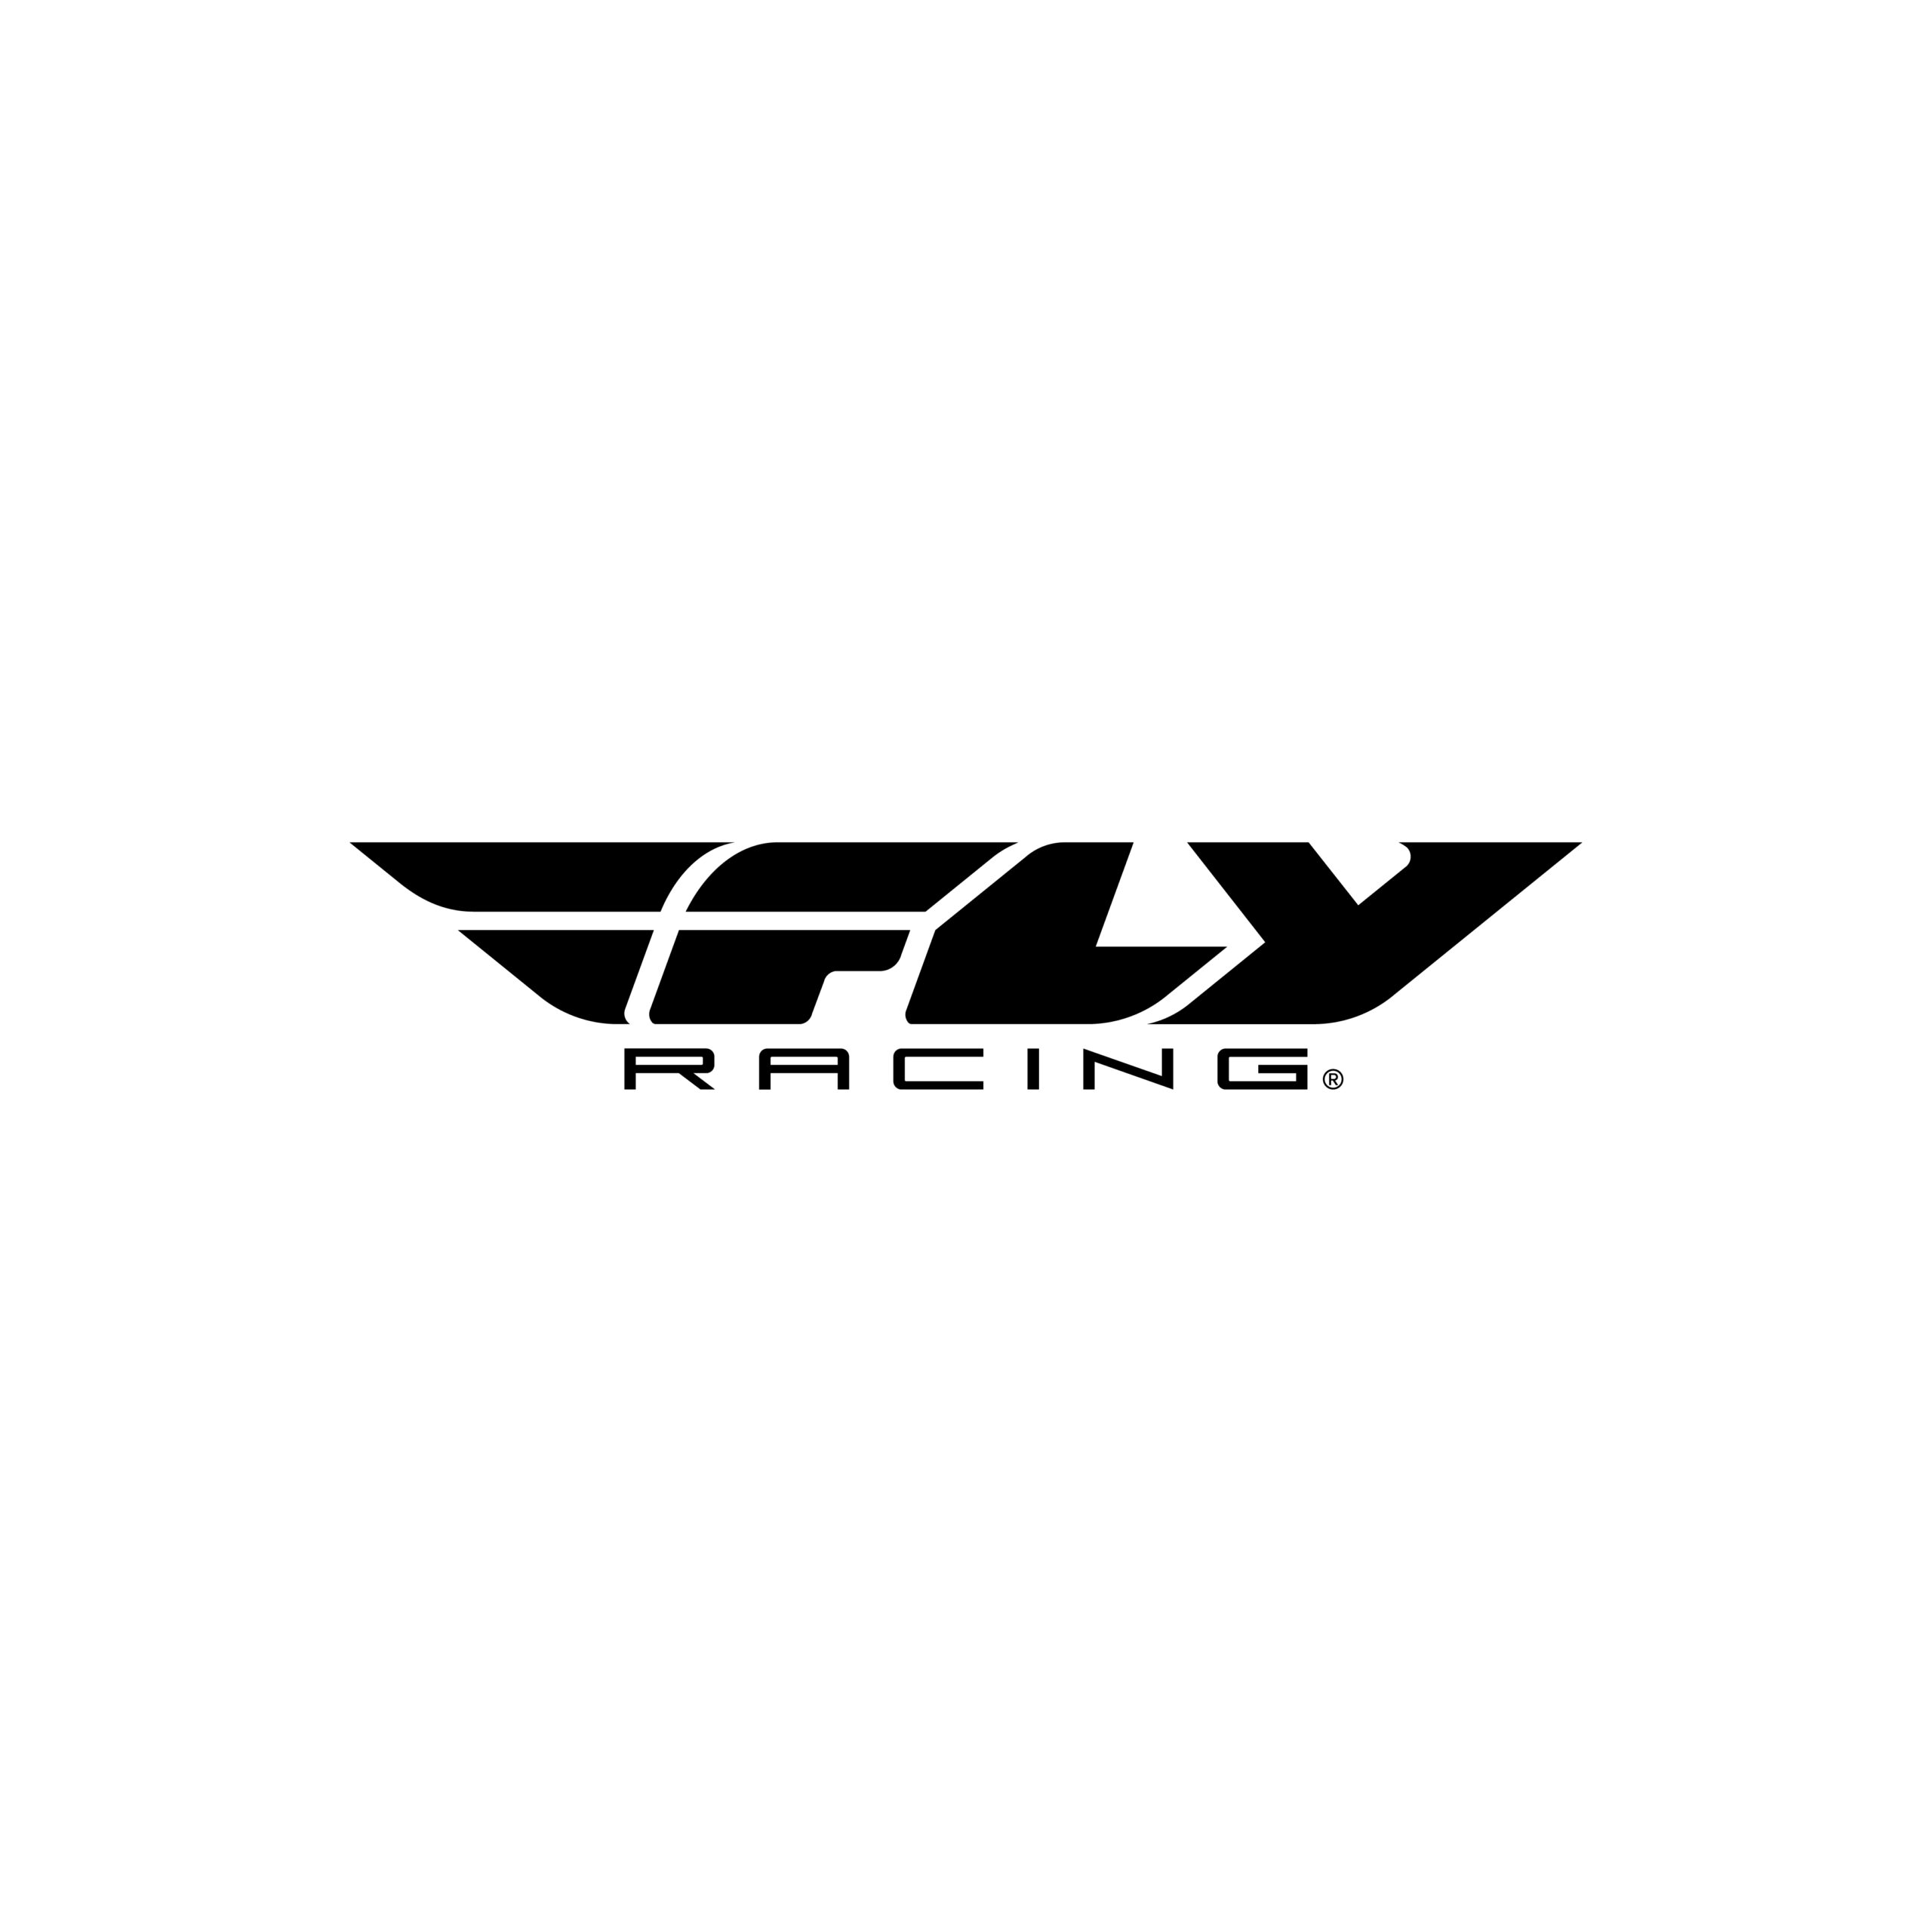 Motor racing logo event Royalty Free Vector Image